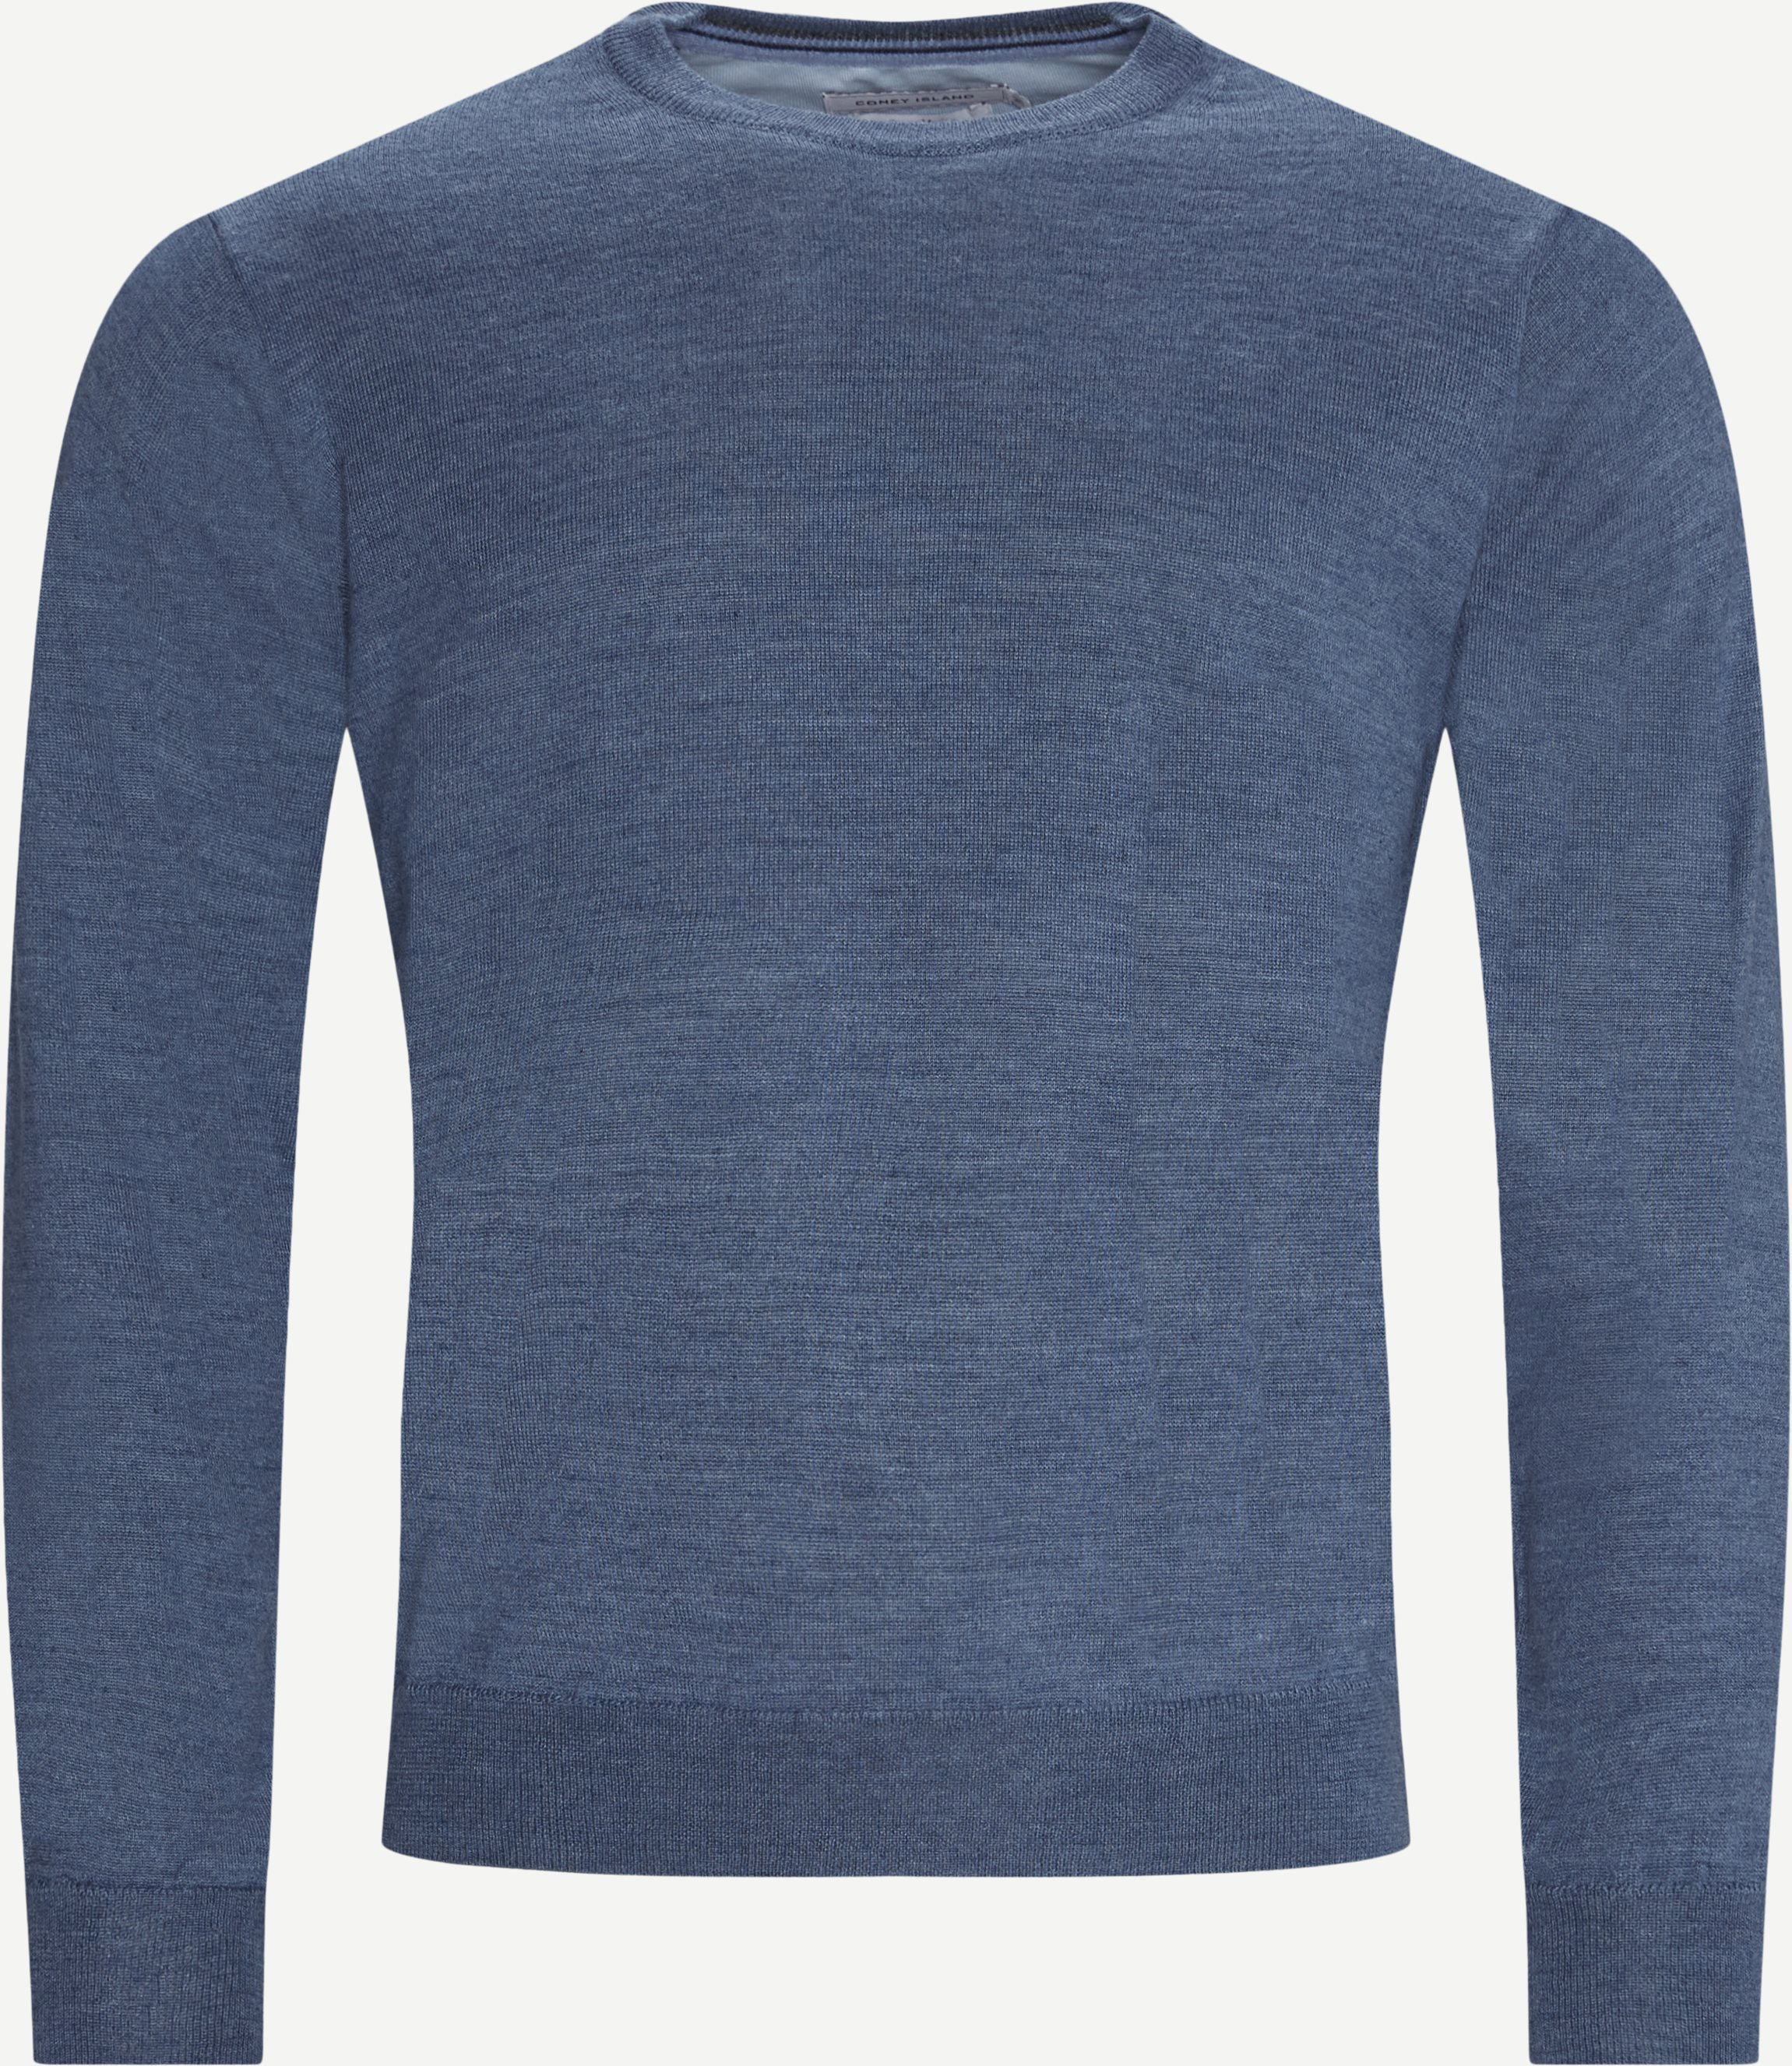 Lipan Merino knitted sweater - Knitwear - Regular fit - Denim